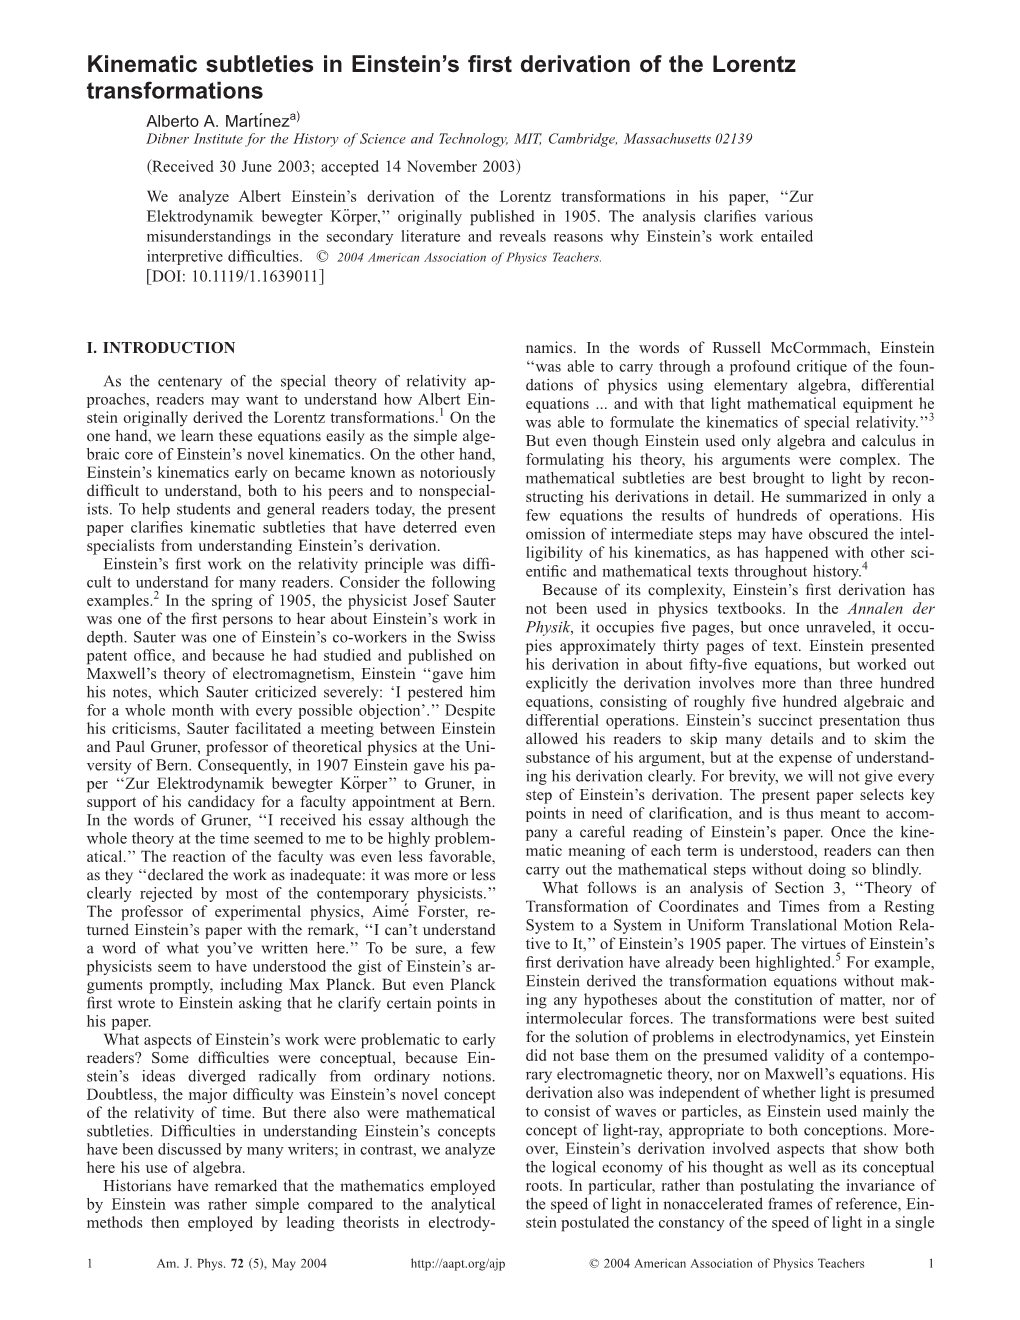 PDF of Lorentz Transforms